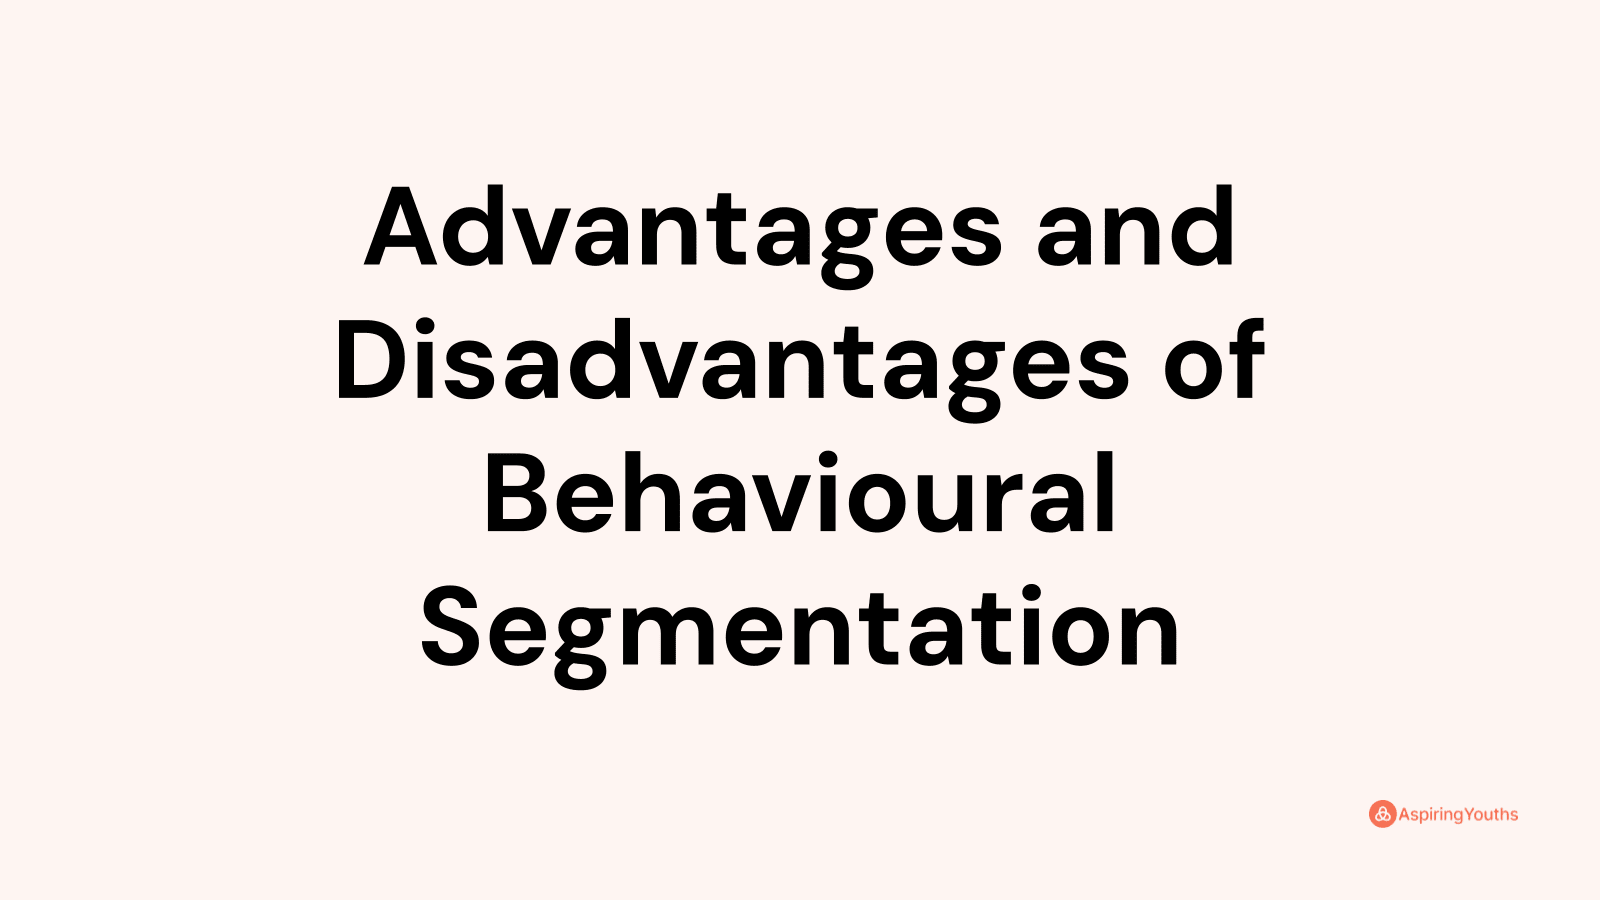 Advantages and disadvantages of Behavioural Segmentation